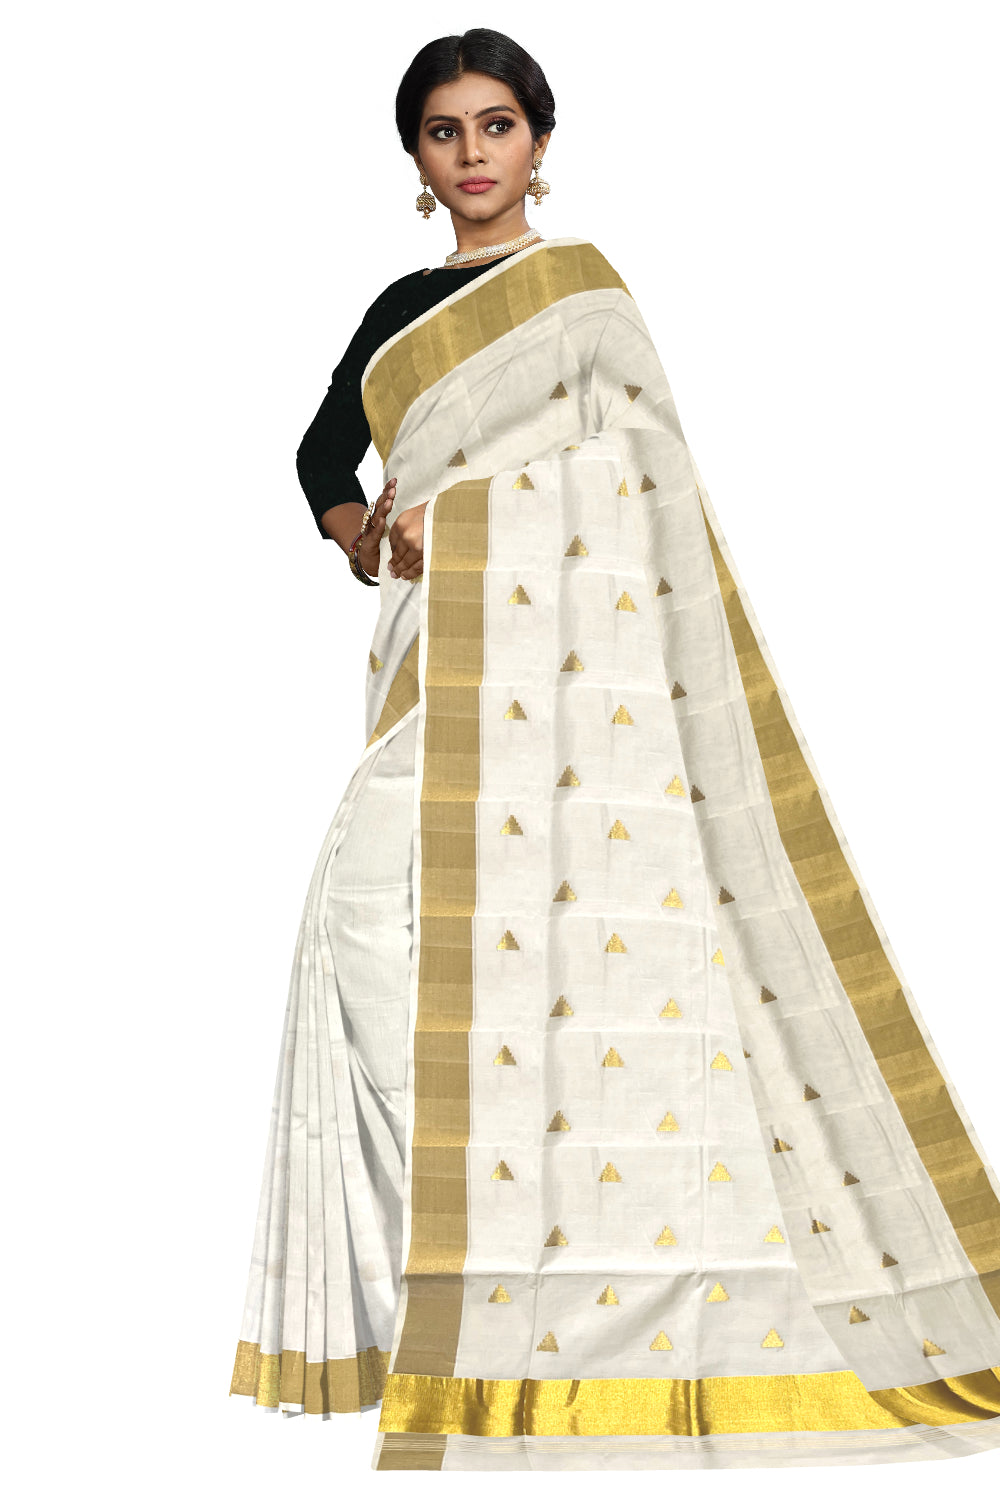 Southloom™ Premium Handloom Kerala Saree with Kasavu Leaf Woven Designs